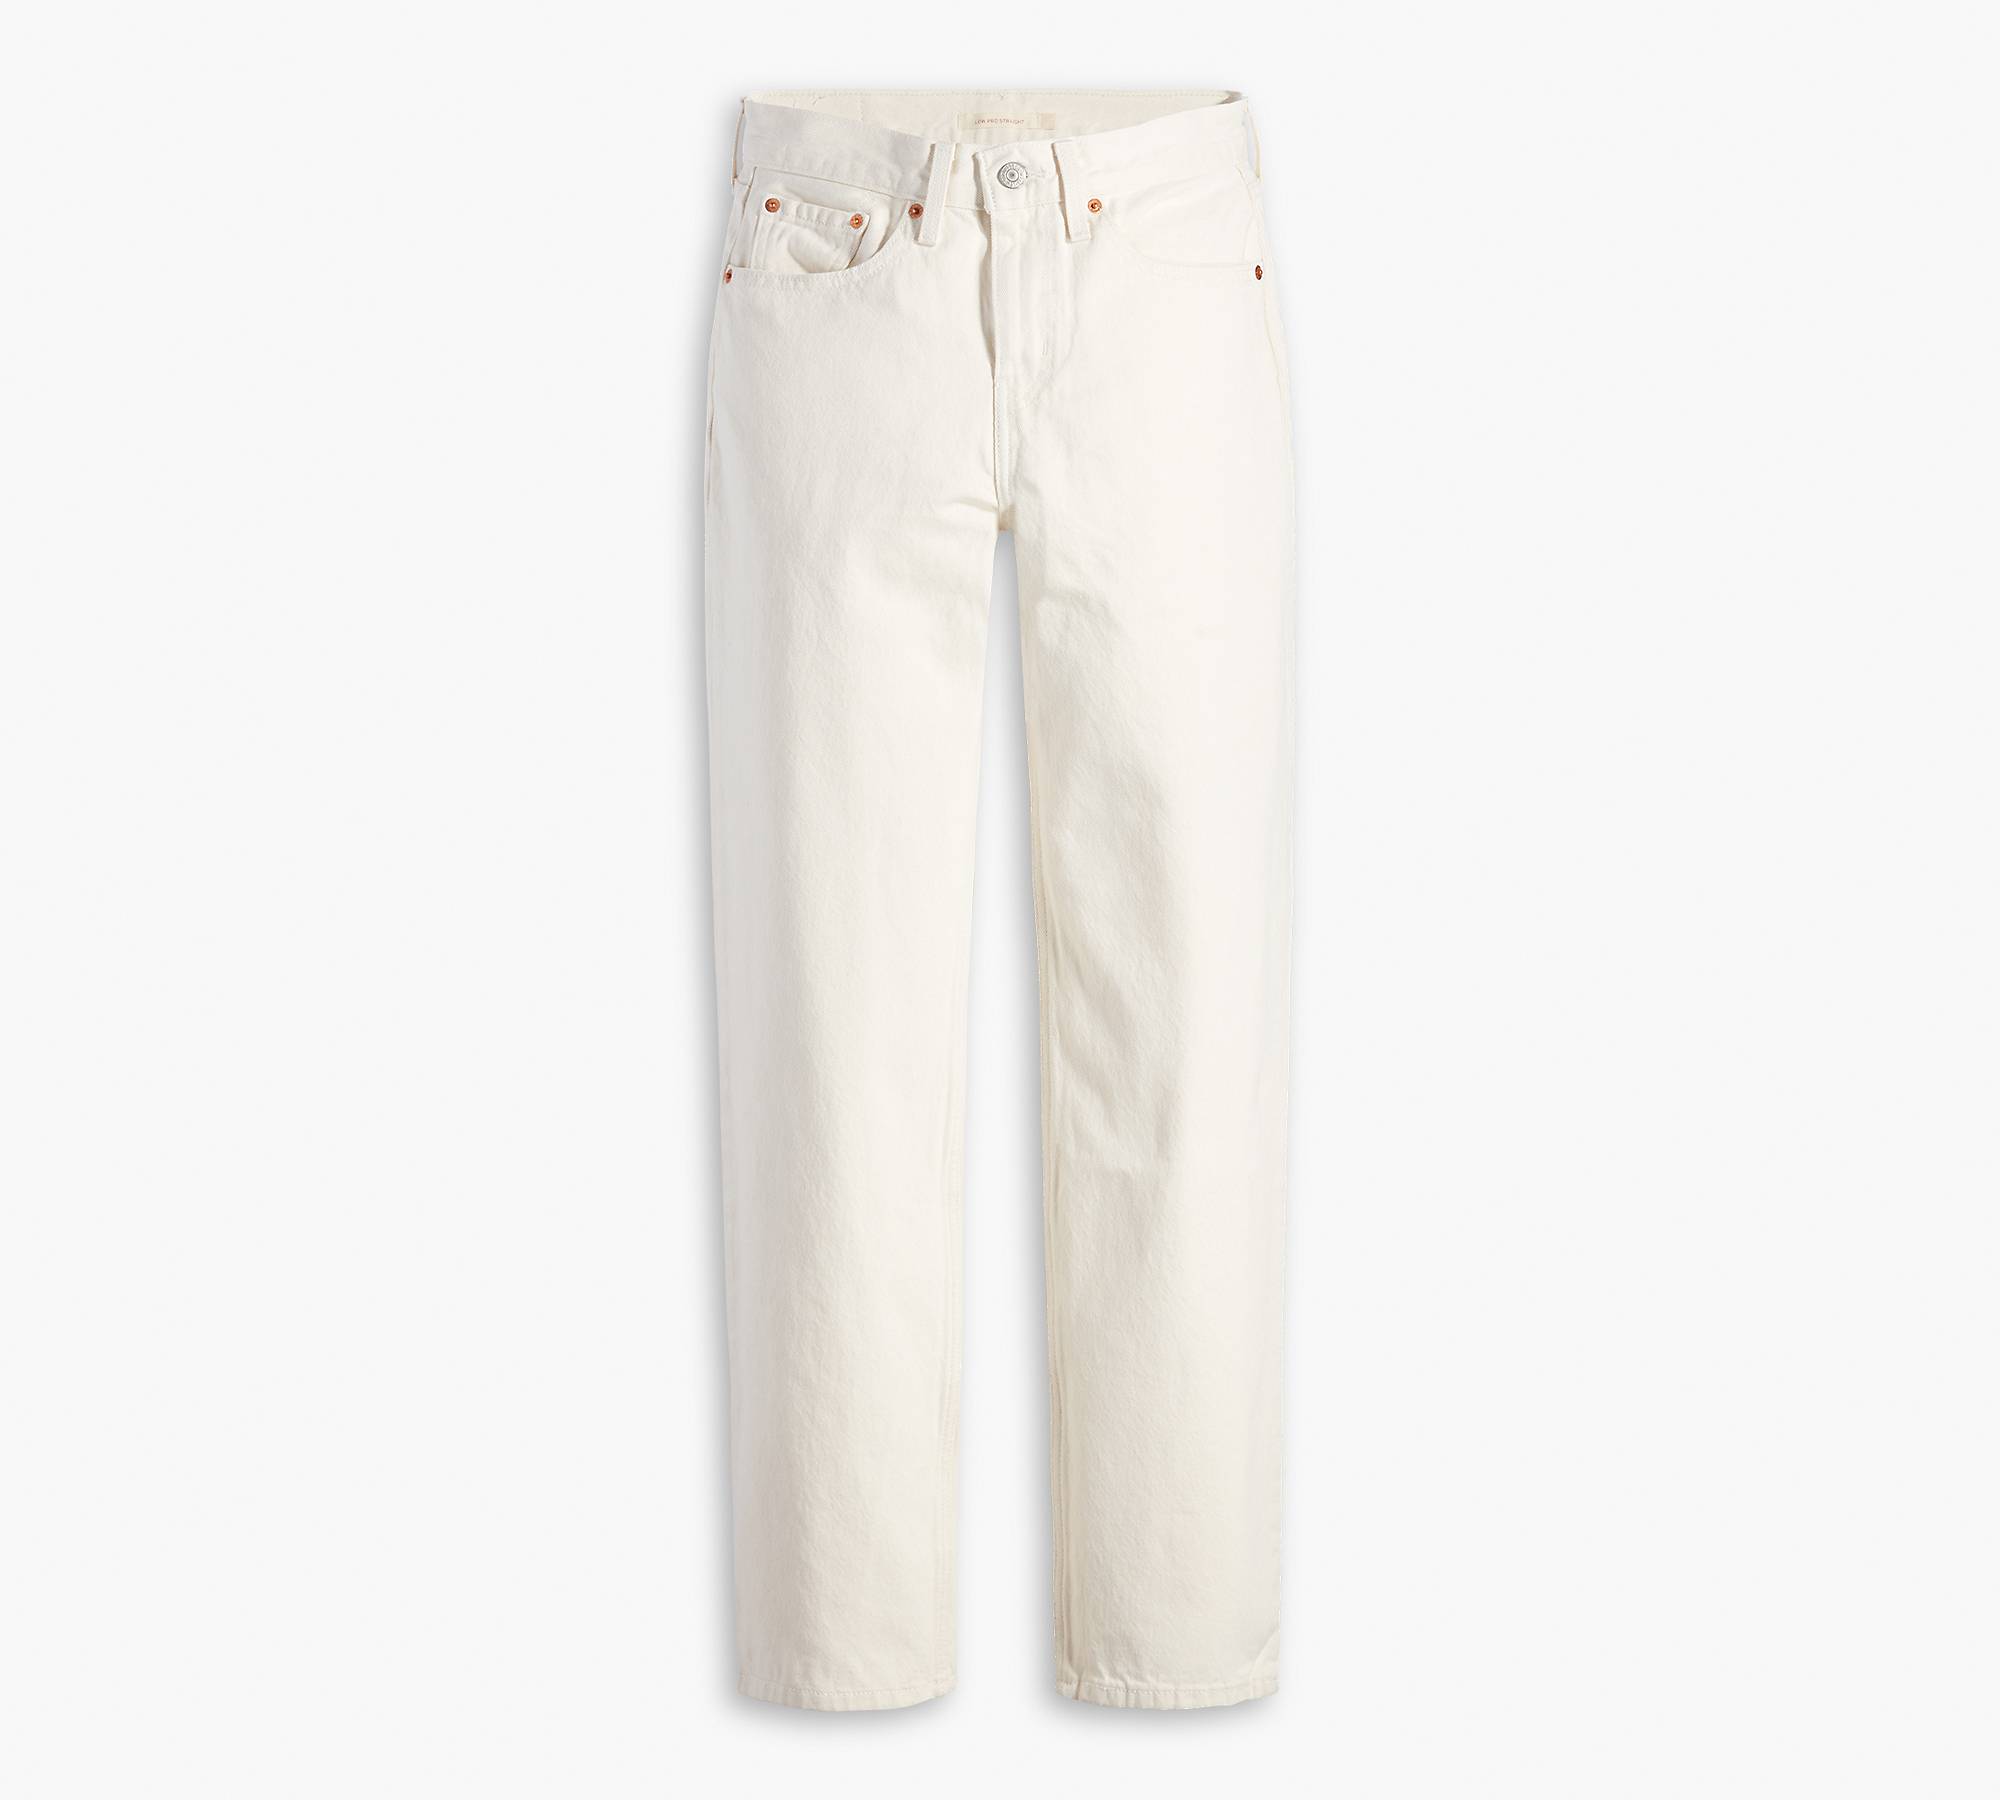 Low Pro Women's Jeans - White